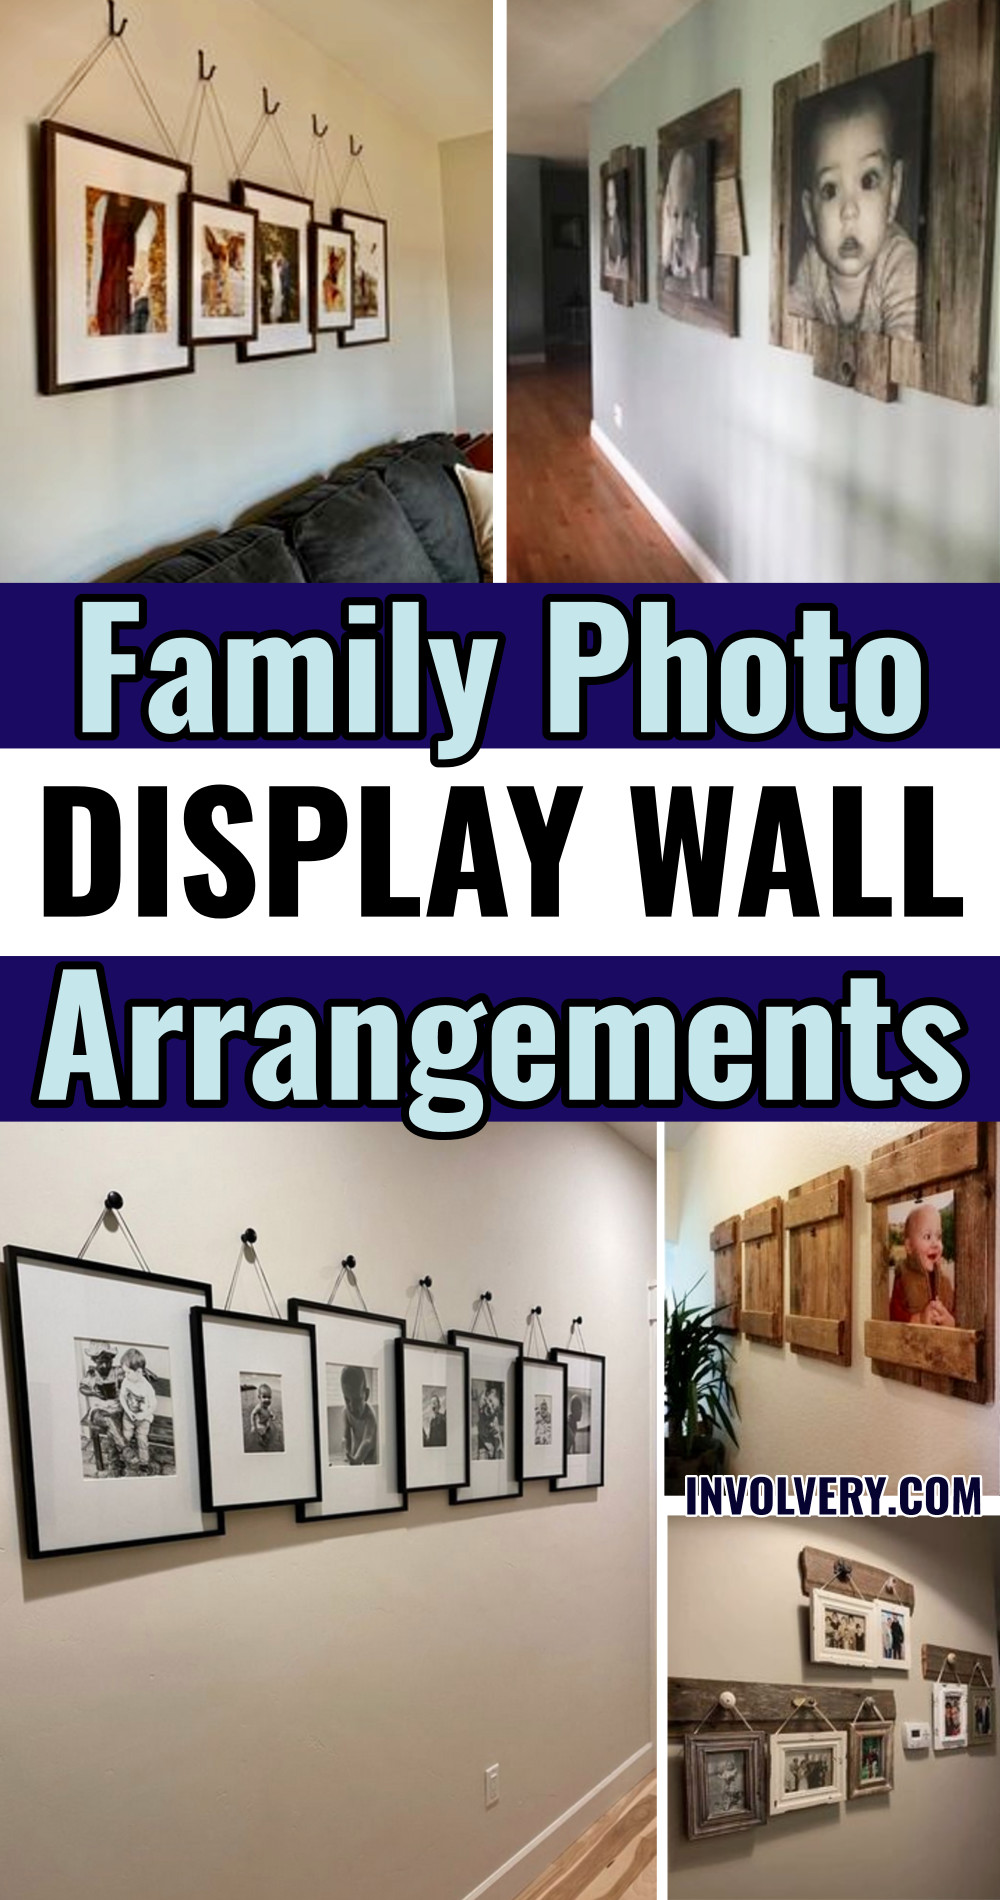 Family Photo Display Wall Arrangements